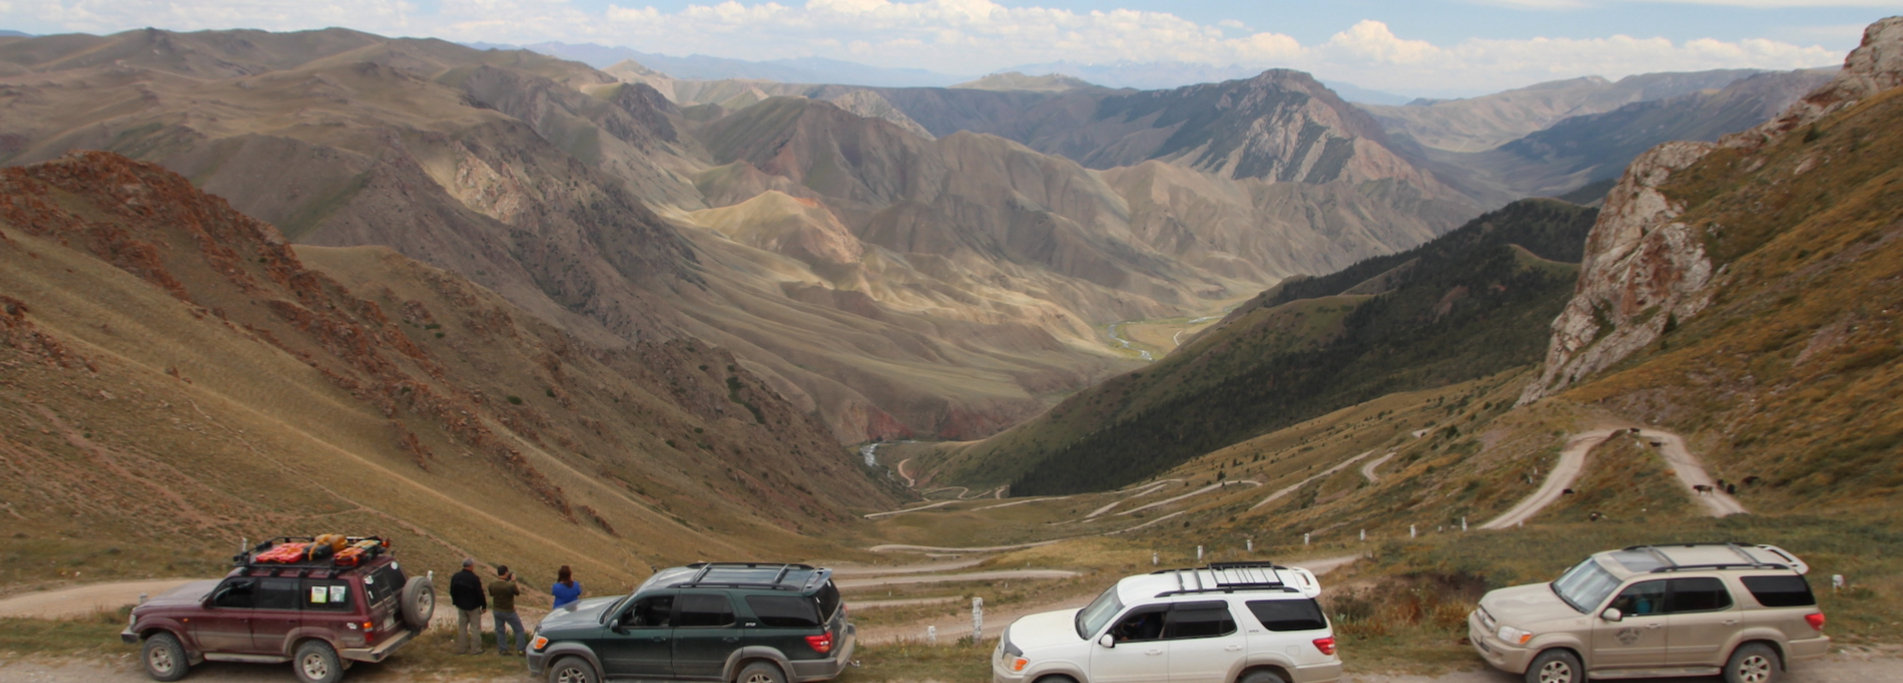 Kyrgyzstan overland-tour  - 4x4 self-driving program 